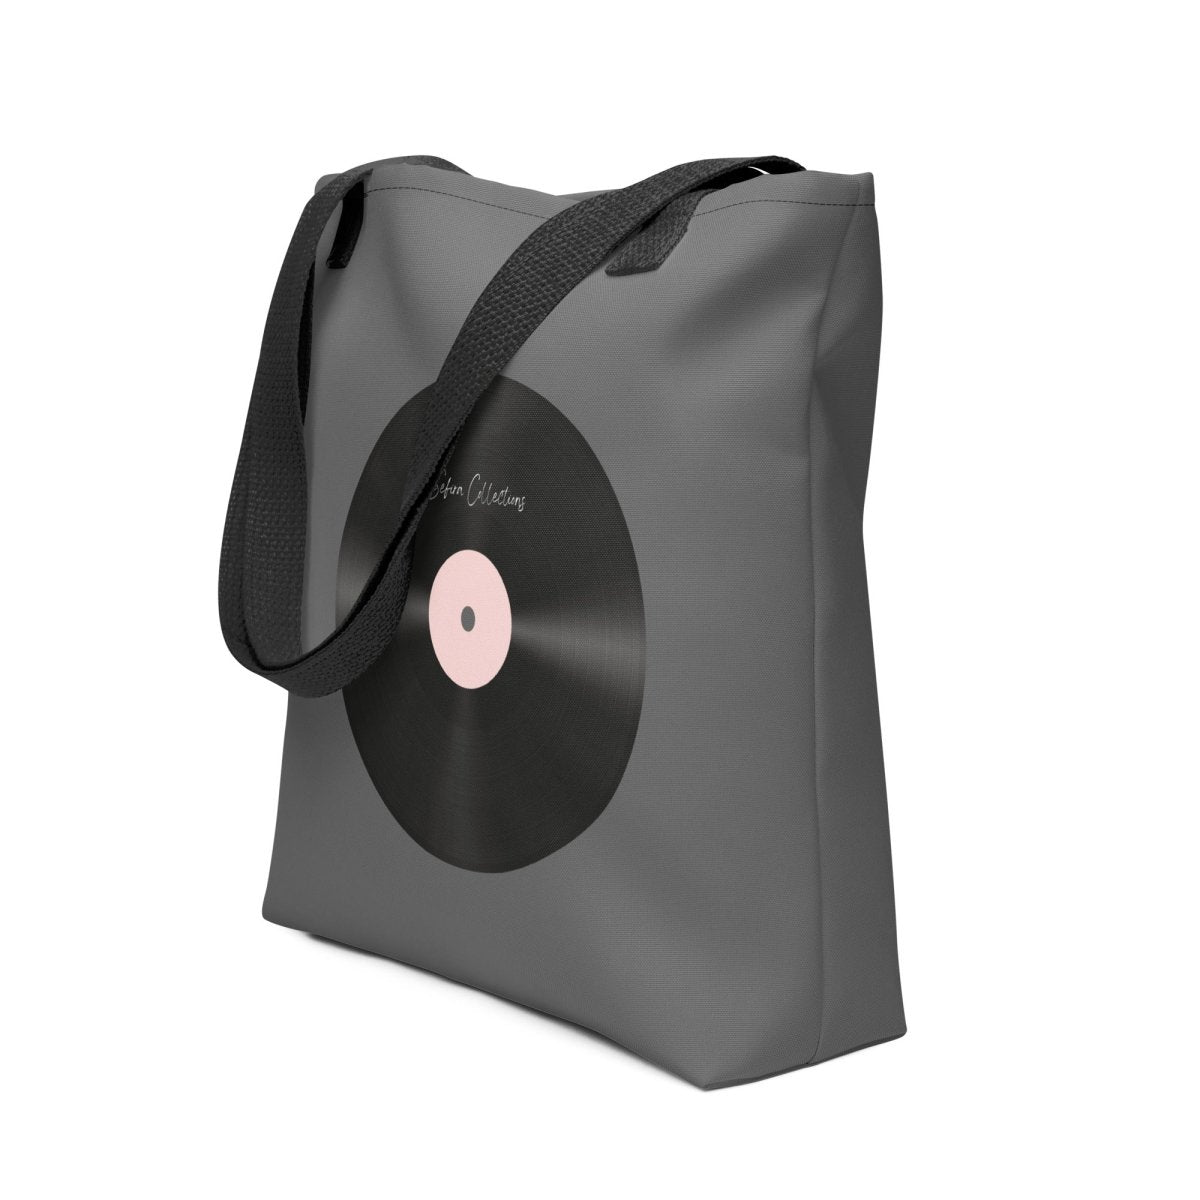 Sefira Vinyl Tote Bag | Sefira Beach Collection Accessories - Sefira Collections